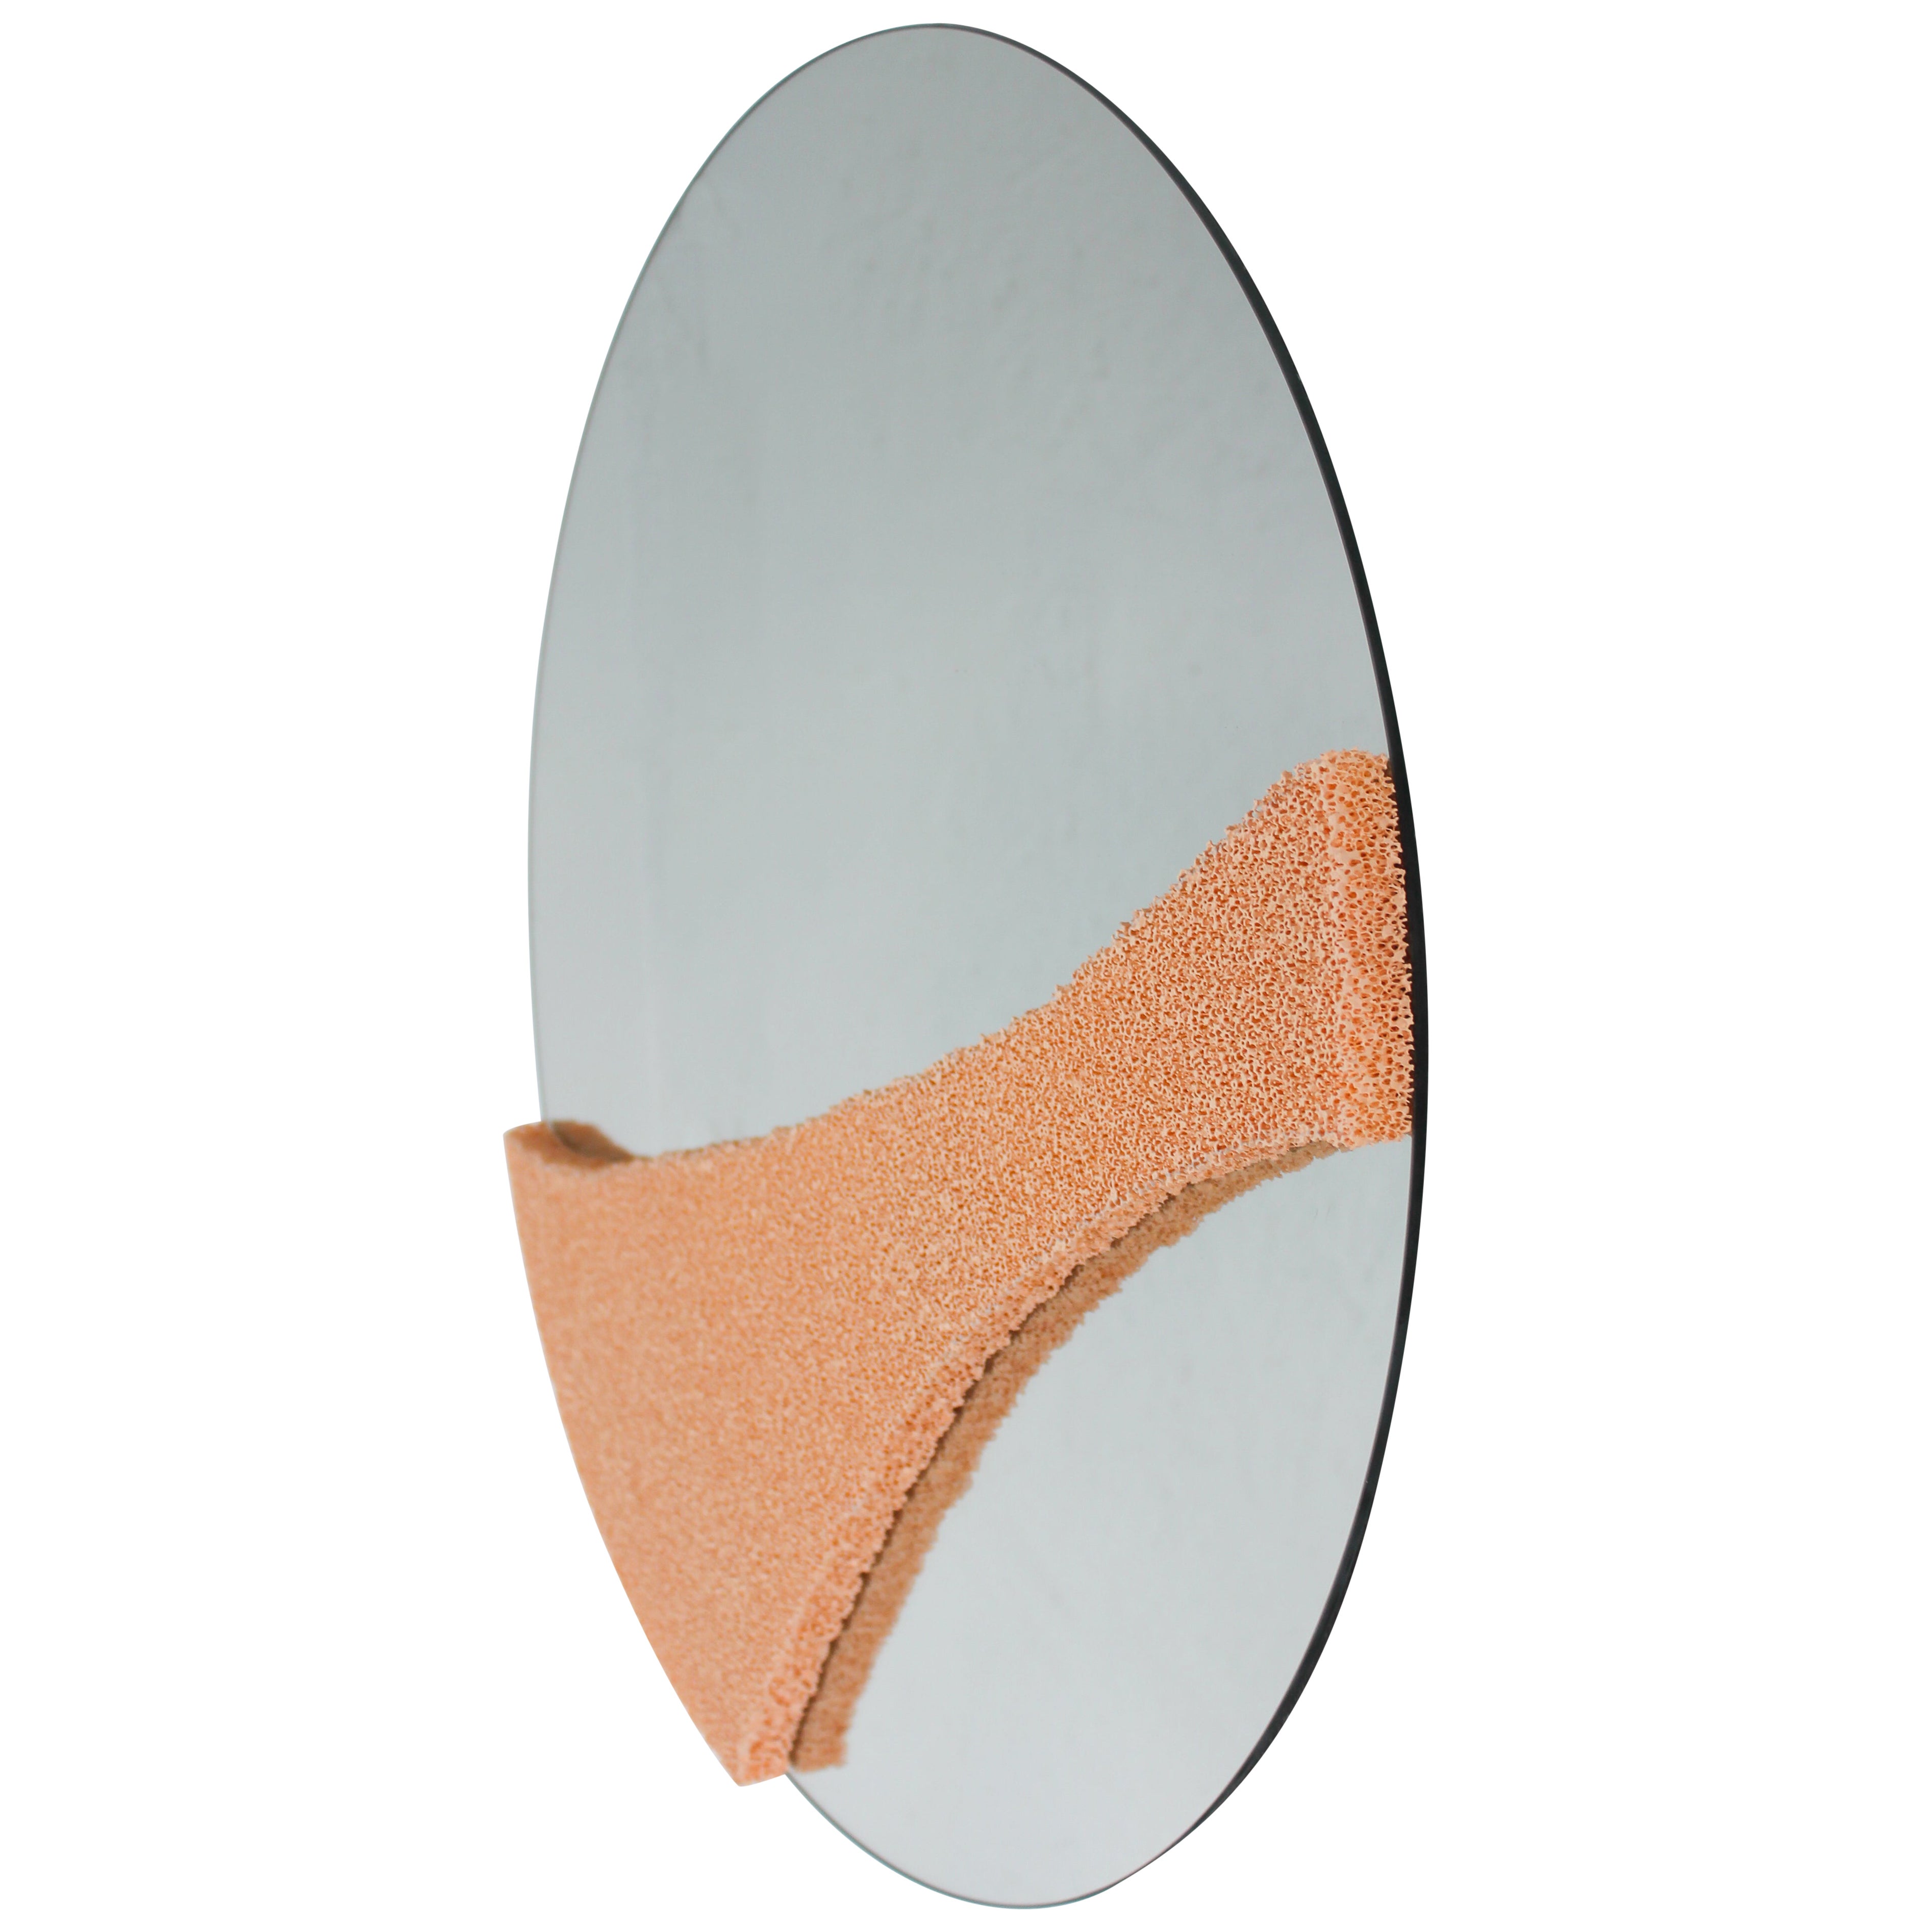 BC - Big Circle, Ceramic Foam Hanging Mirror by Jordan Keaney